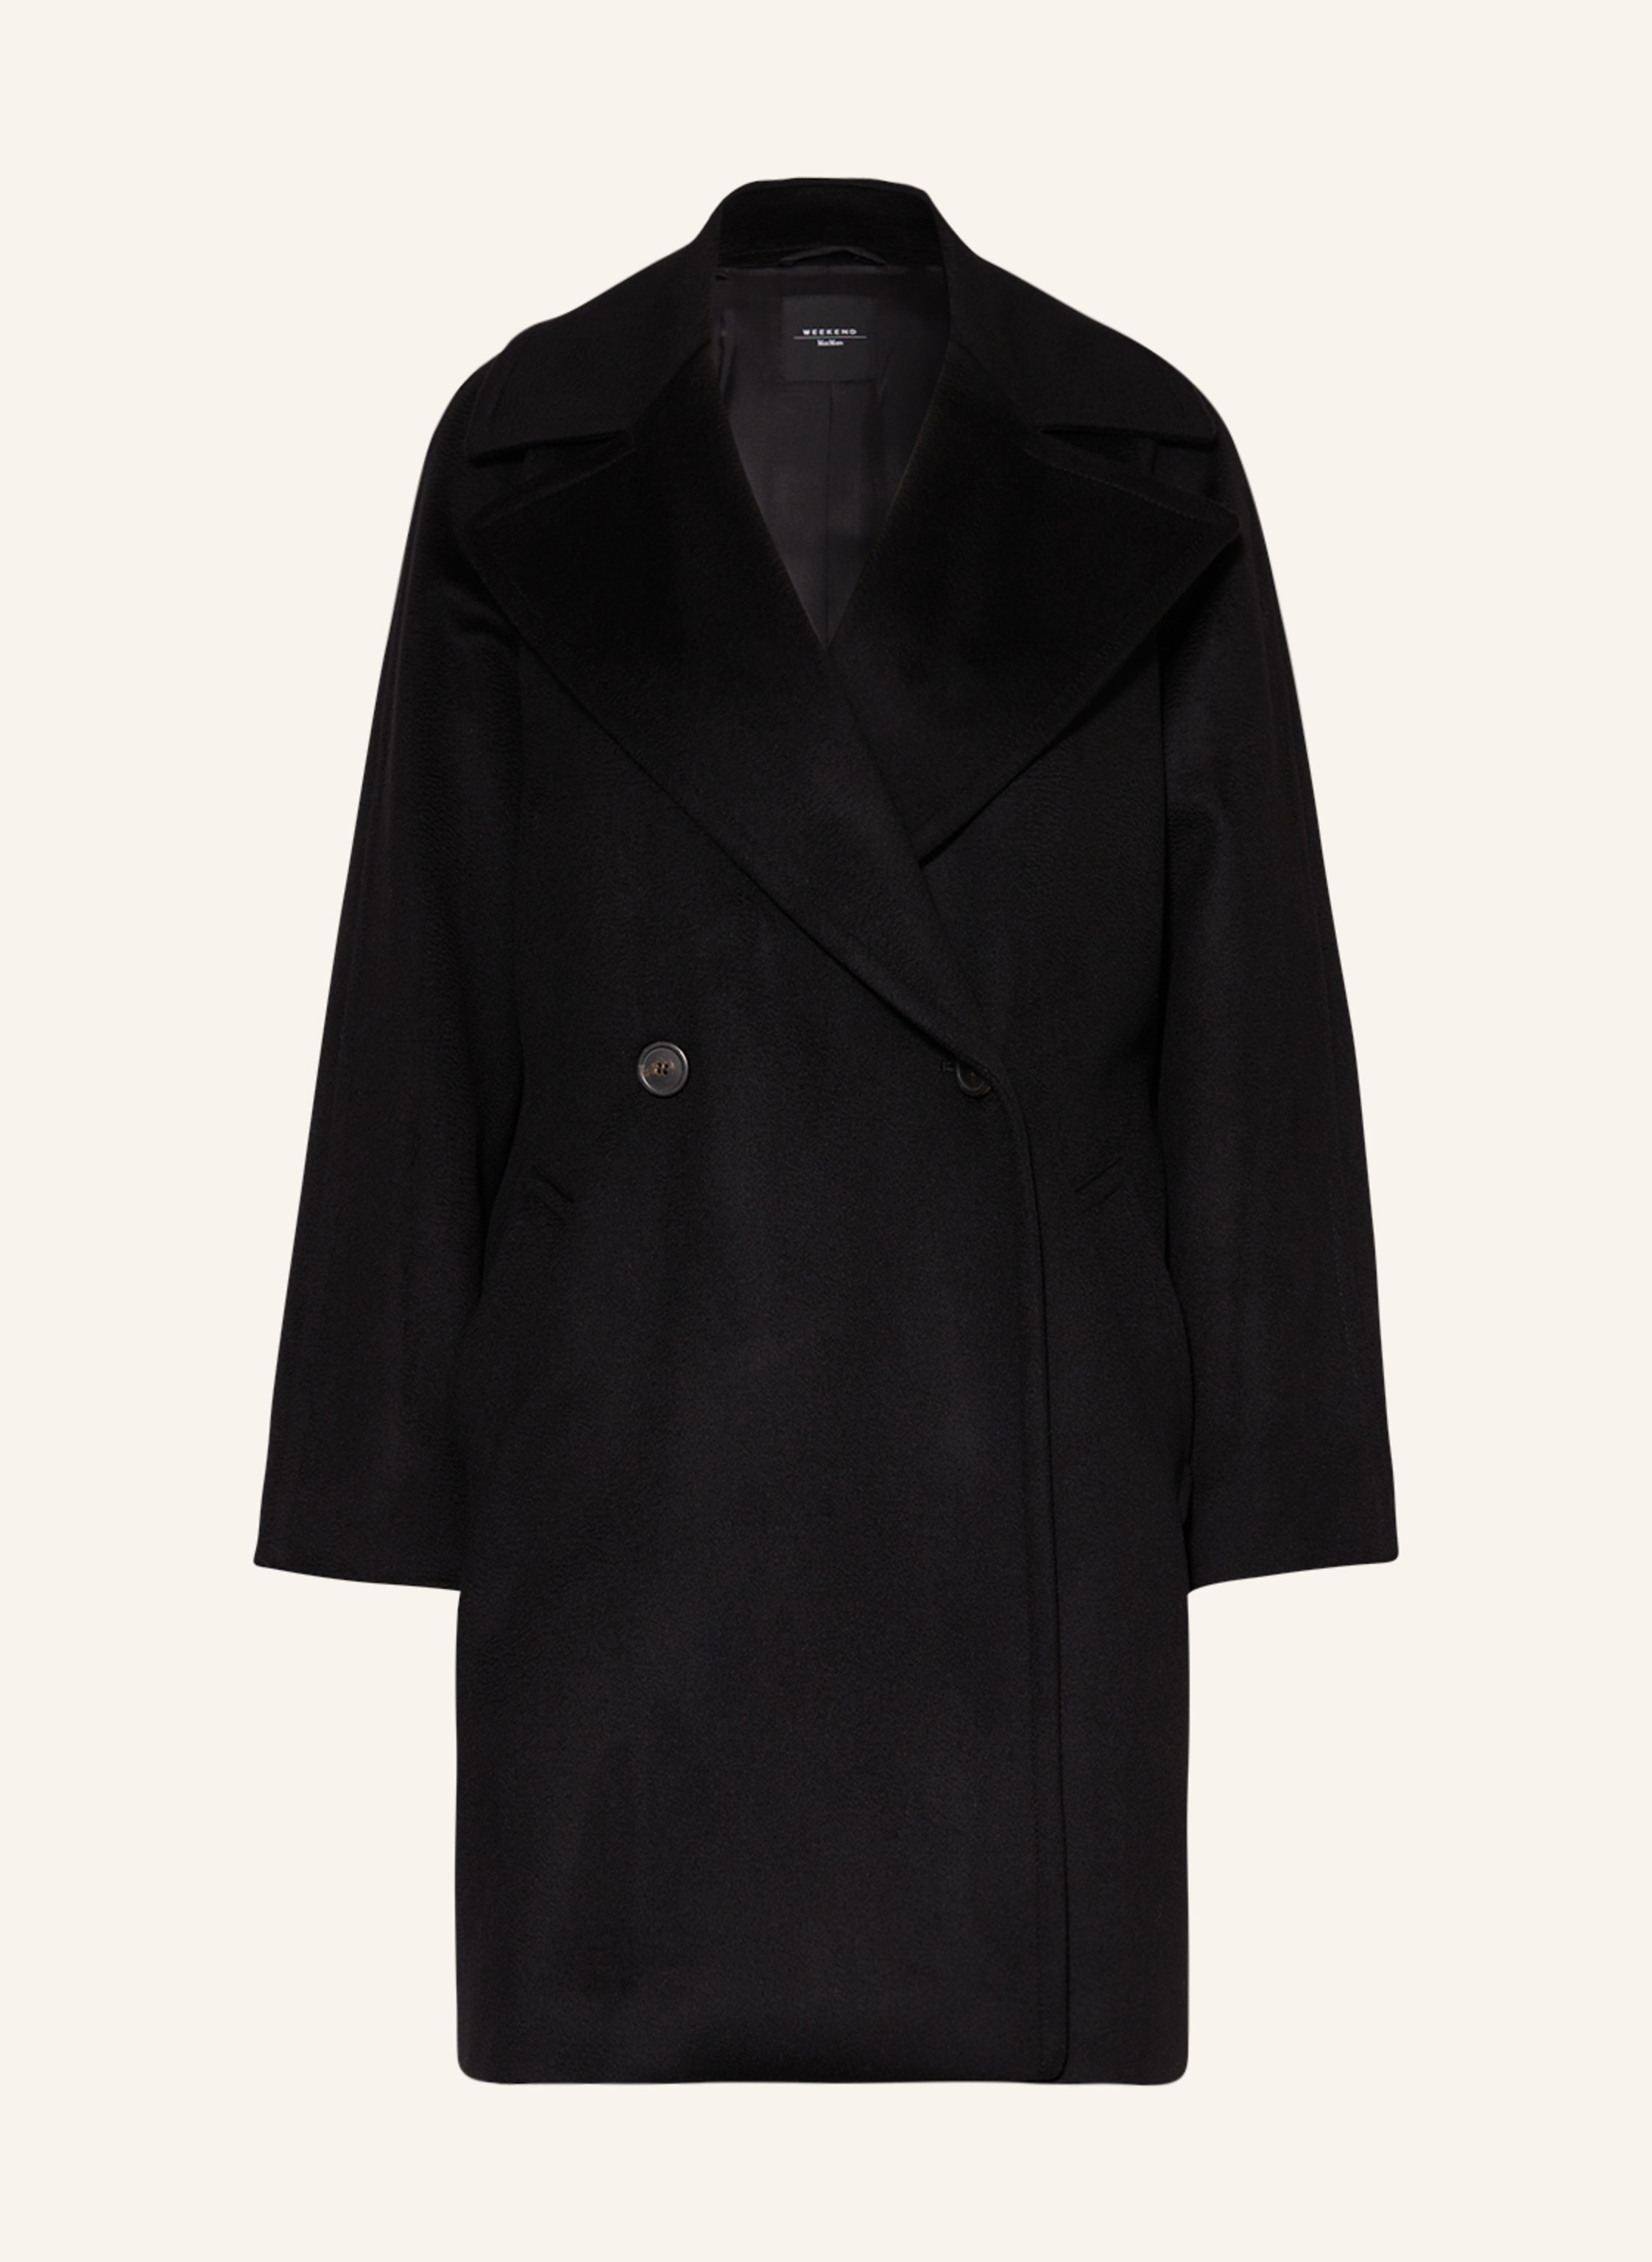 Black Rovo coat, Weekend Max Mara